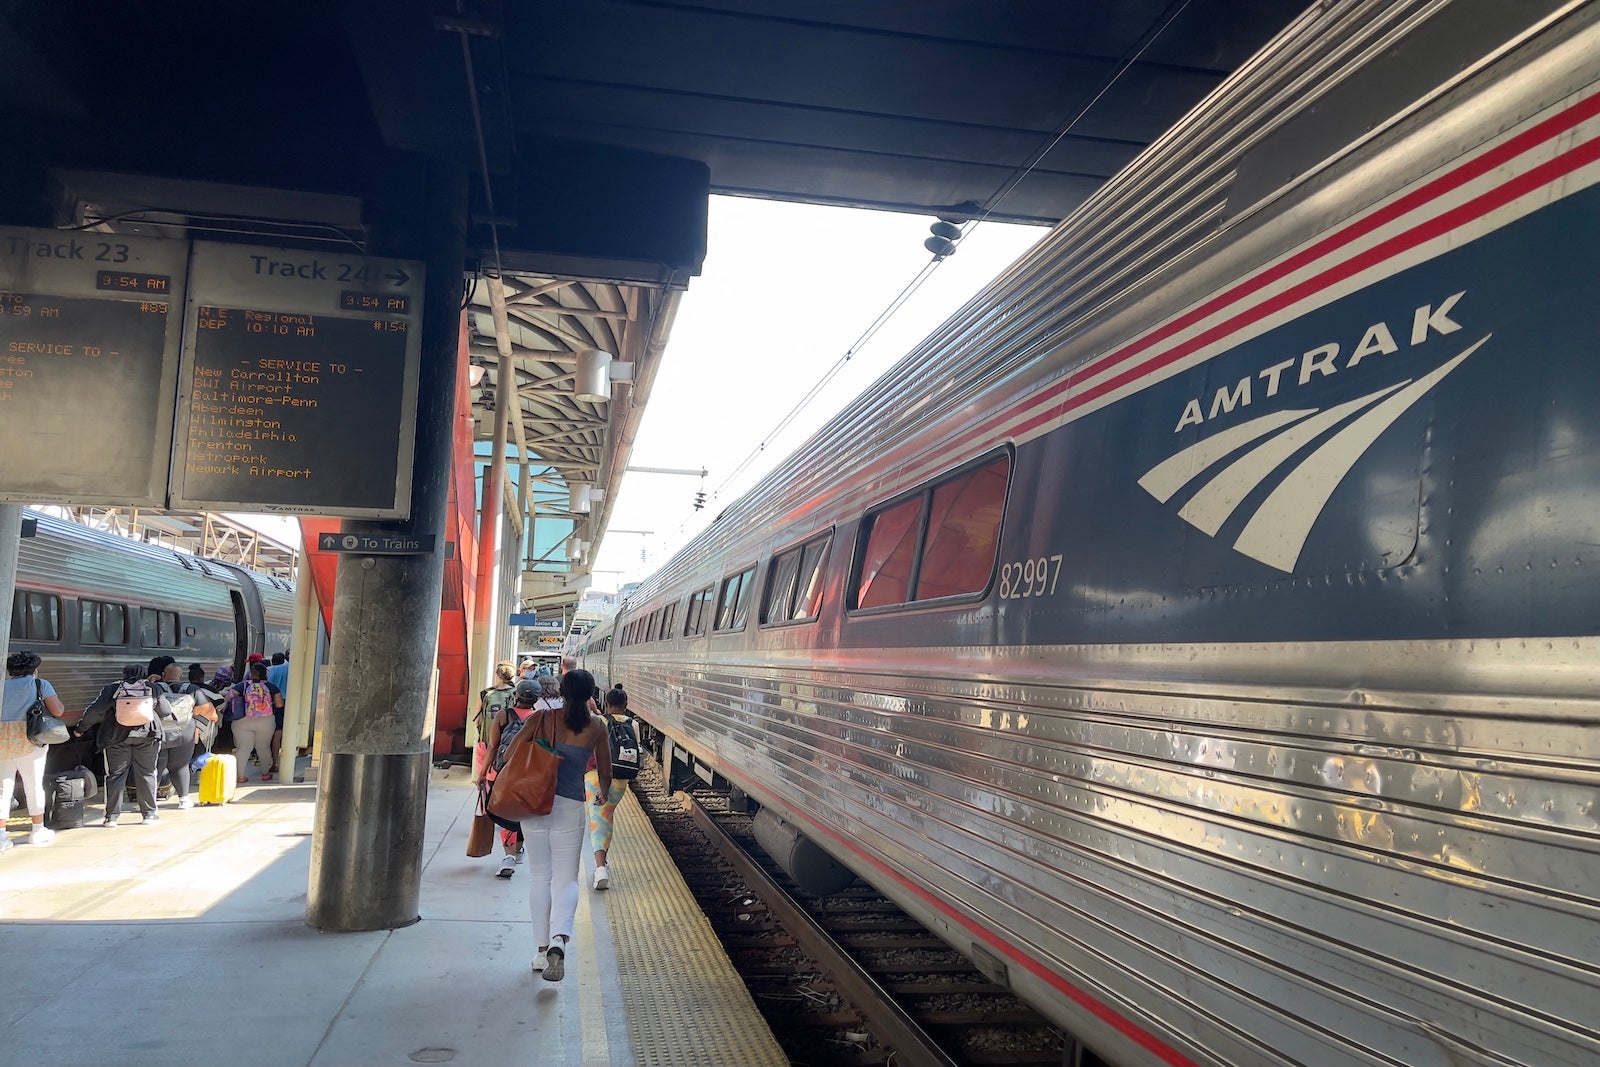 Amtrak train at Union Station